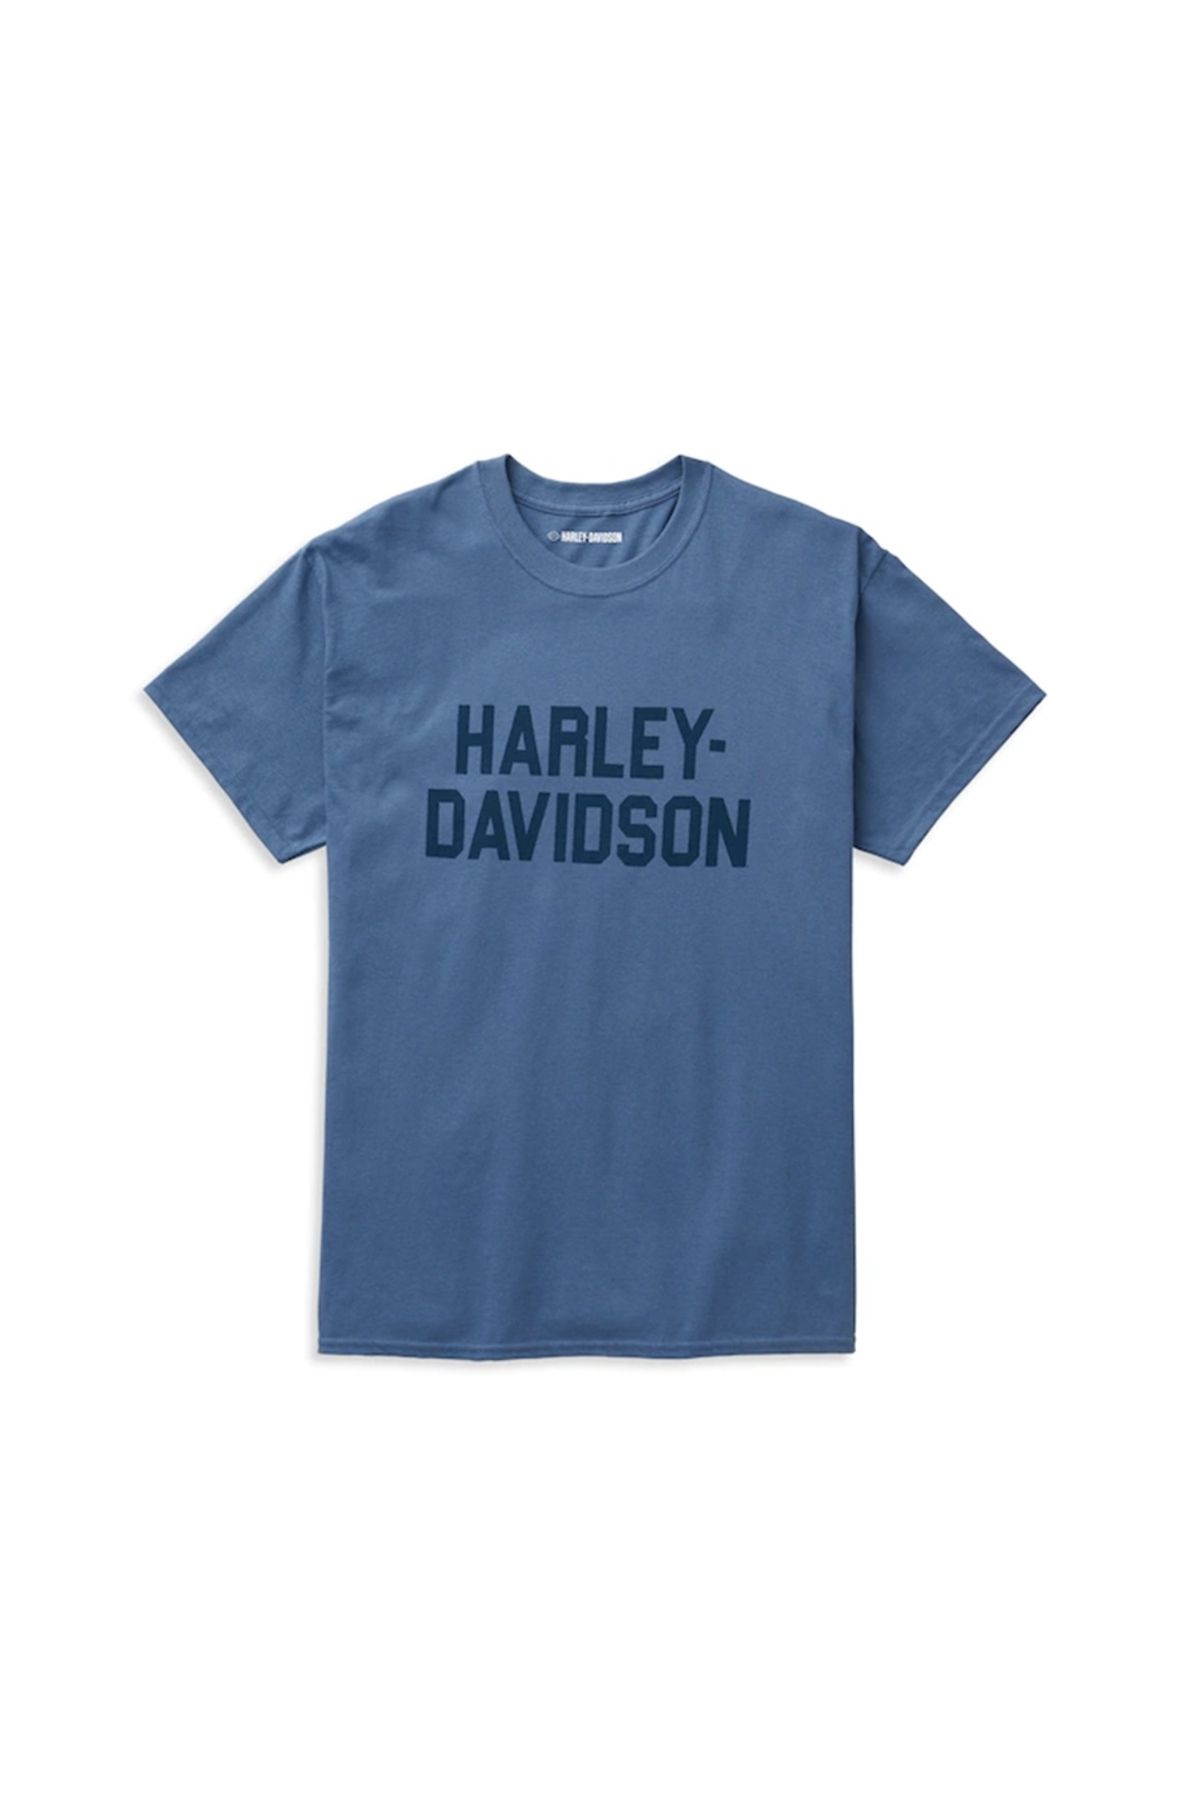 Harley Davidson Harley-davidson Men's Foundation Tee